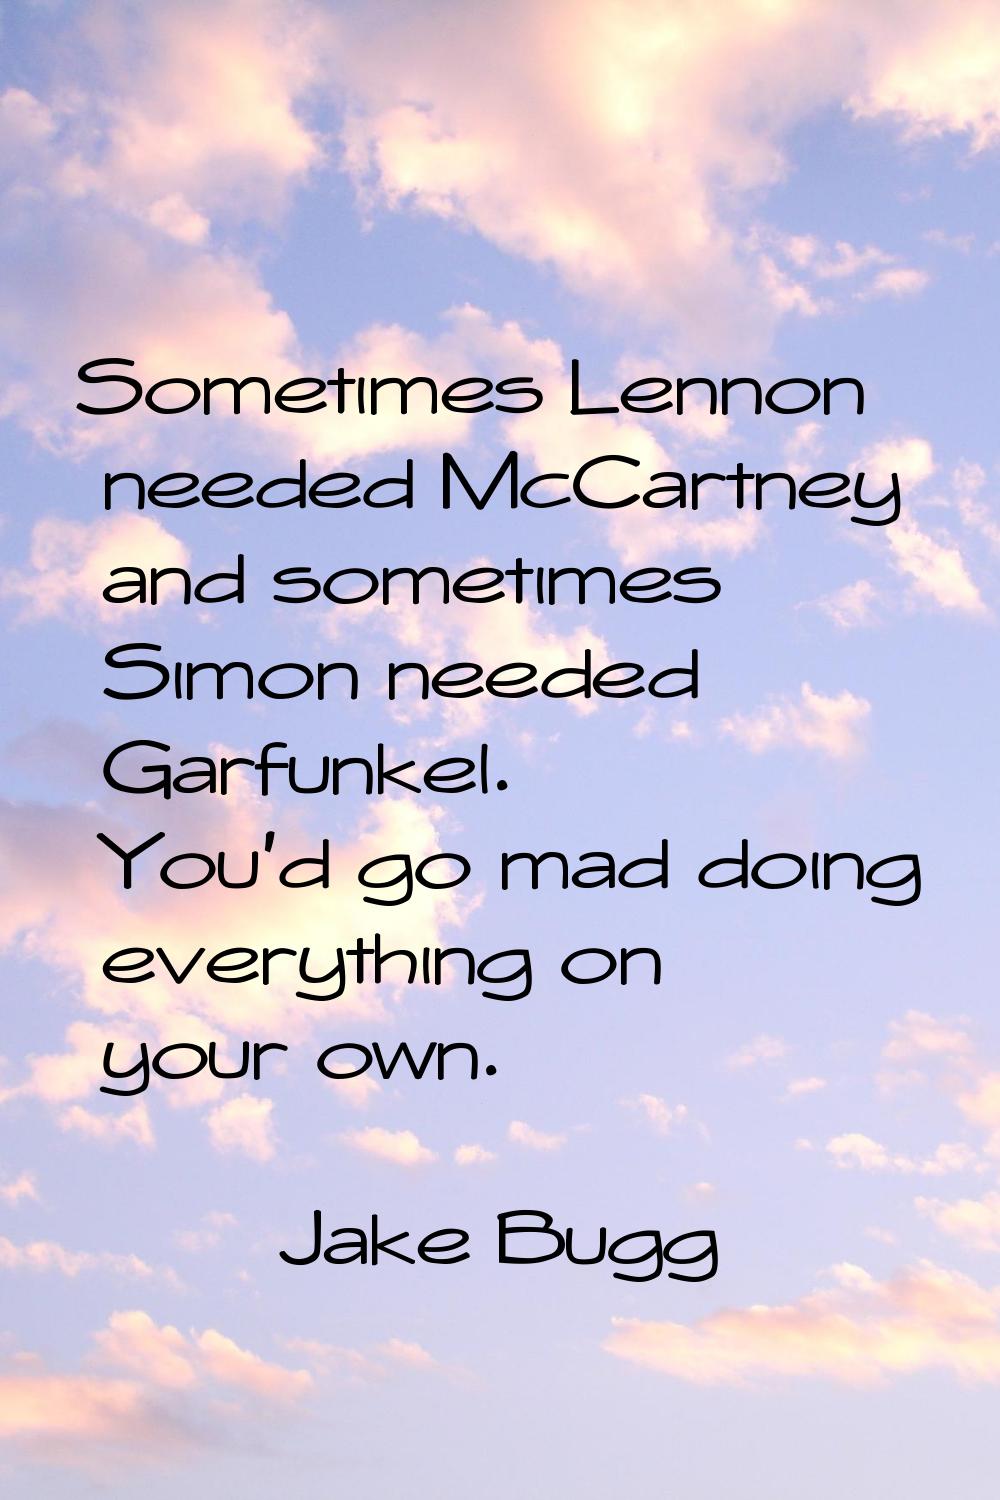 Sometimes Lennon needed McCartney and sometimes Simon needed Garfunkel. You'd go mad doing everythi